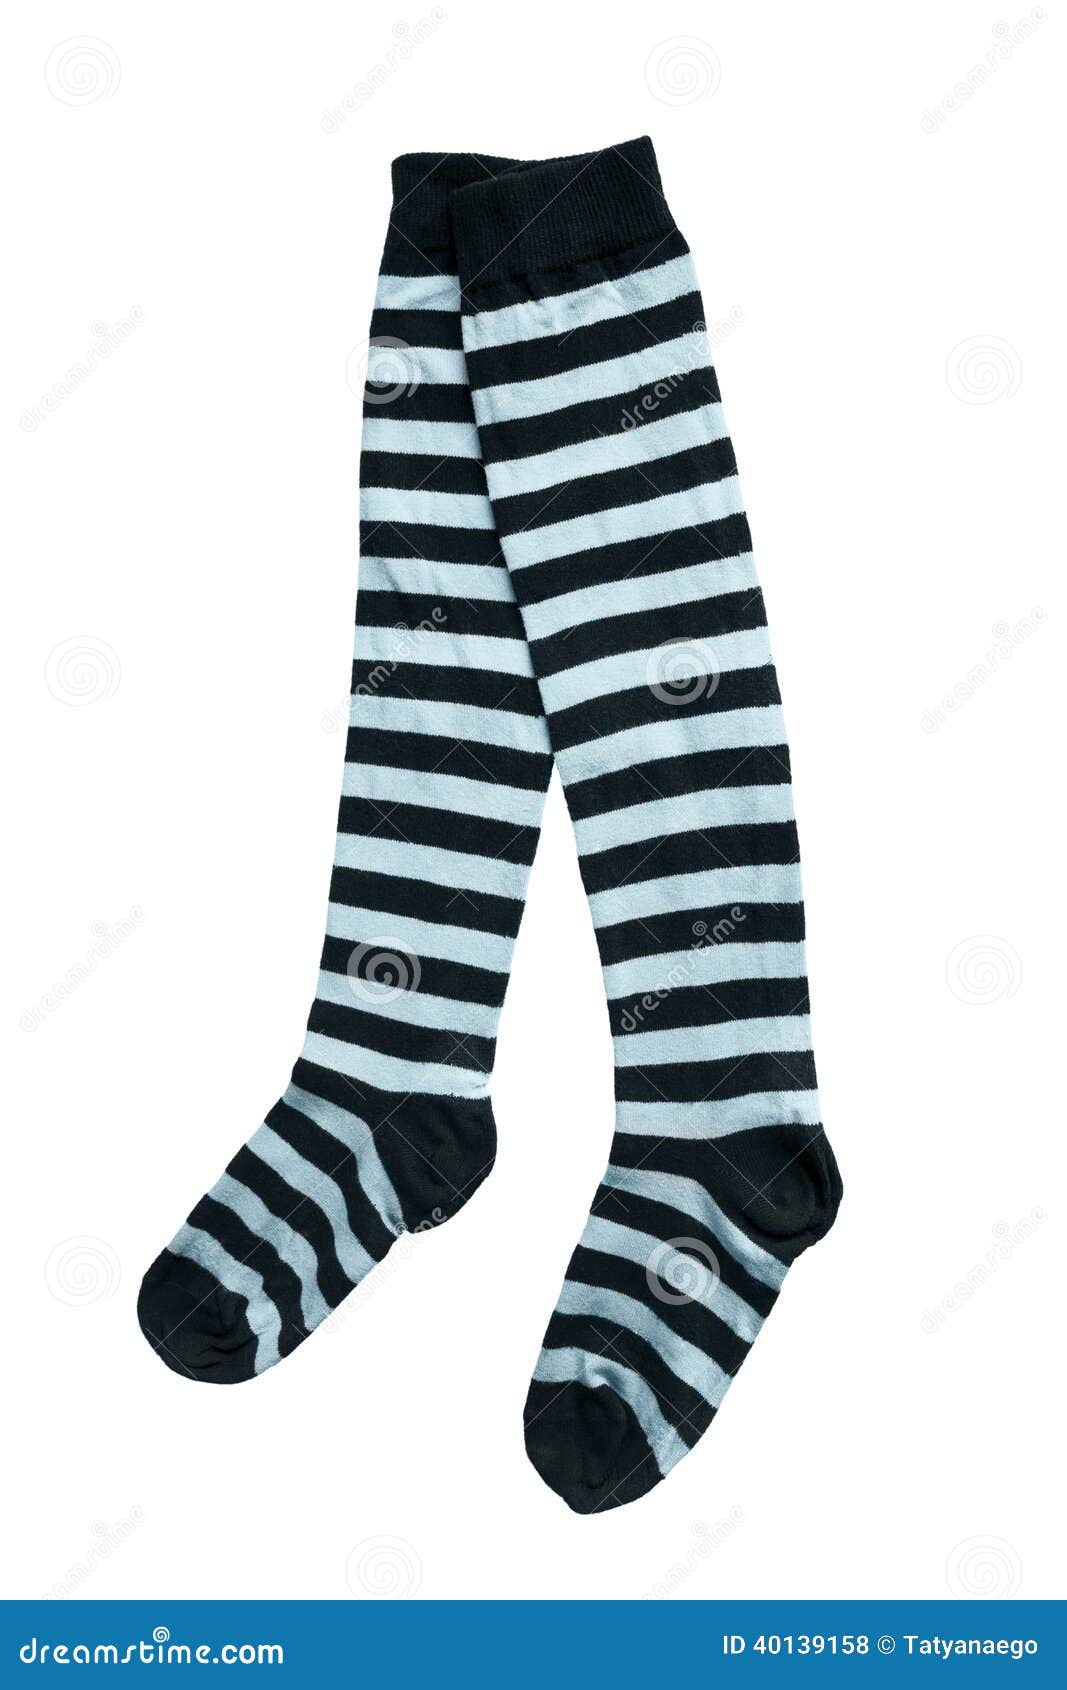 Knee socks stock photo. Image of kids, accessories, hygiene - 40139158